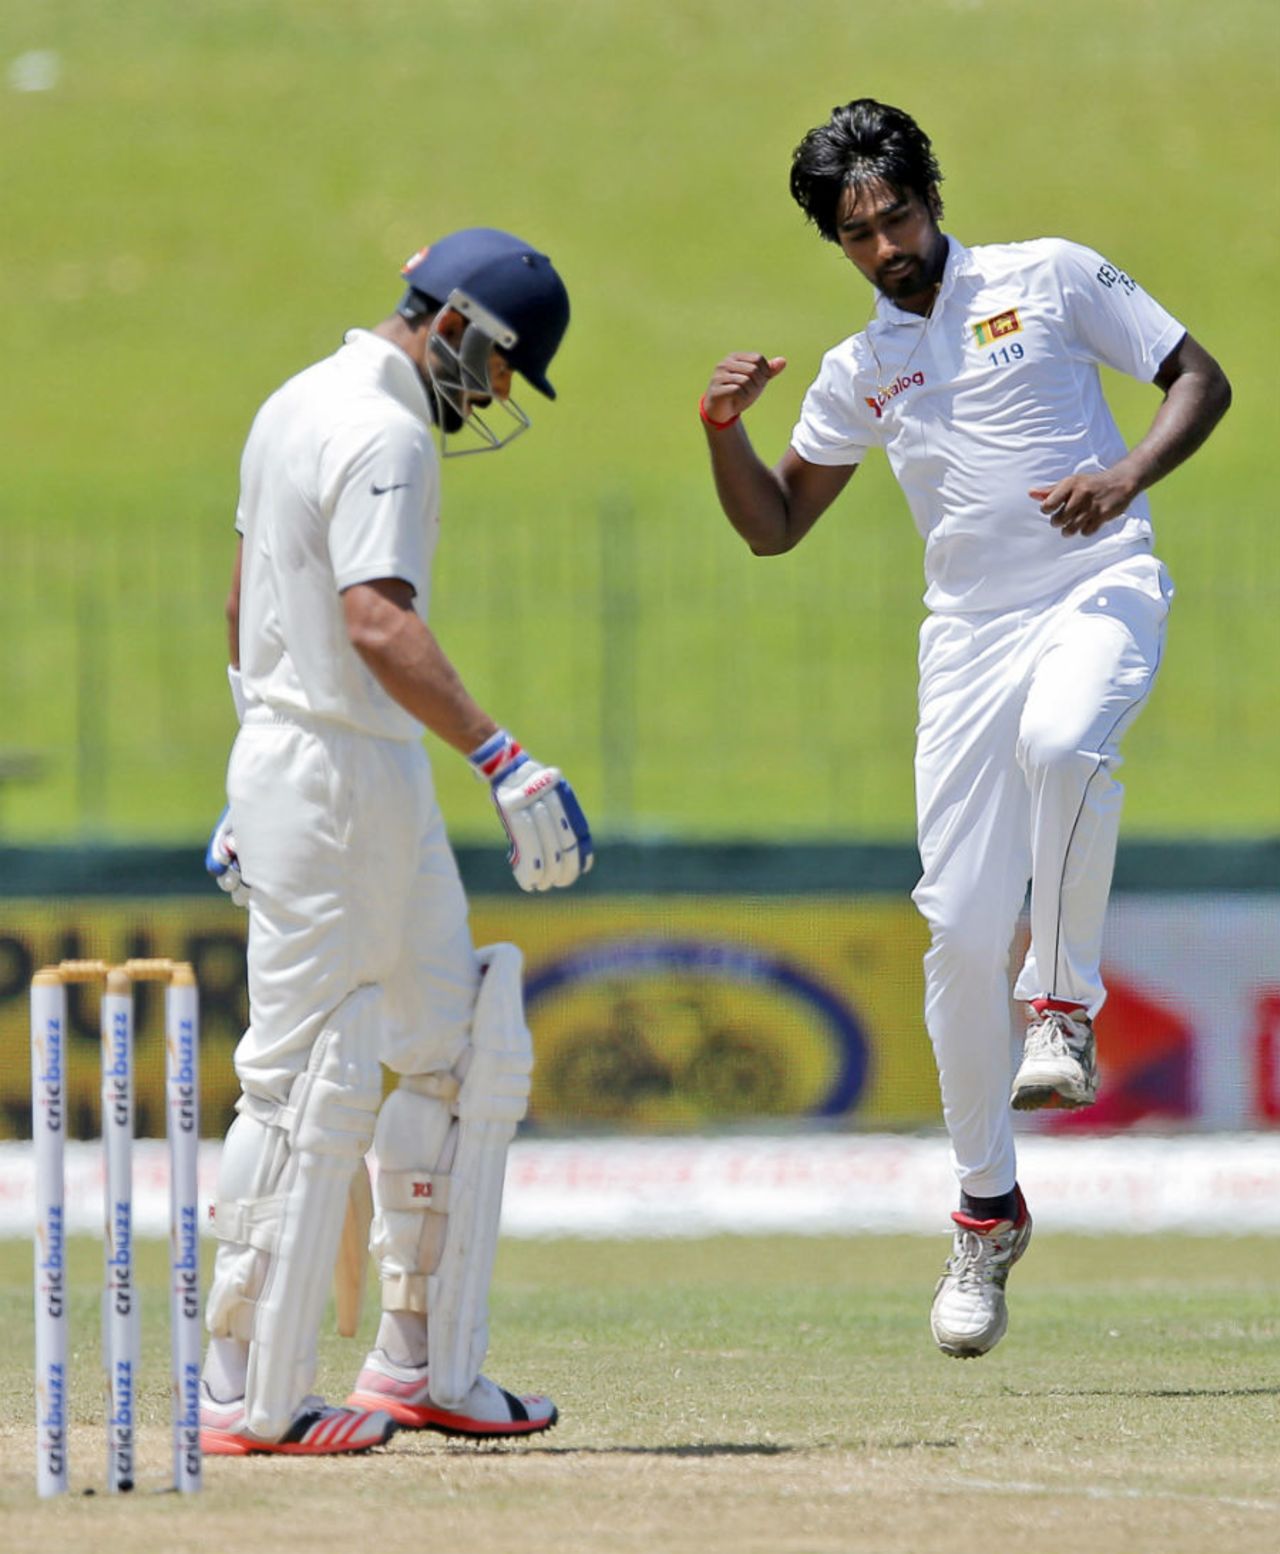 Nuwan Pradeep celebrates after dismissing Virat Kohli,  Sri Lanka v India, 3rd Test, SSC, Colombo, 4th day, August 31, 2015